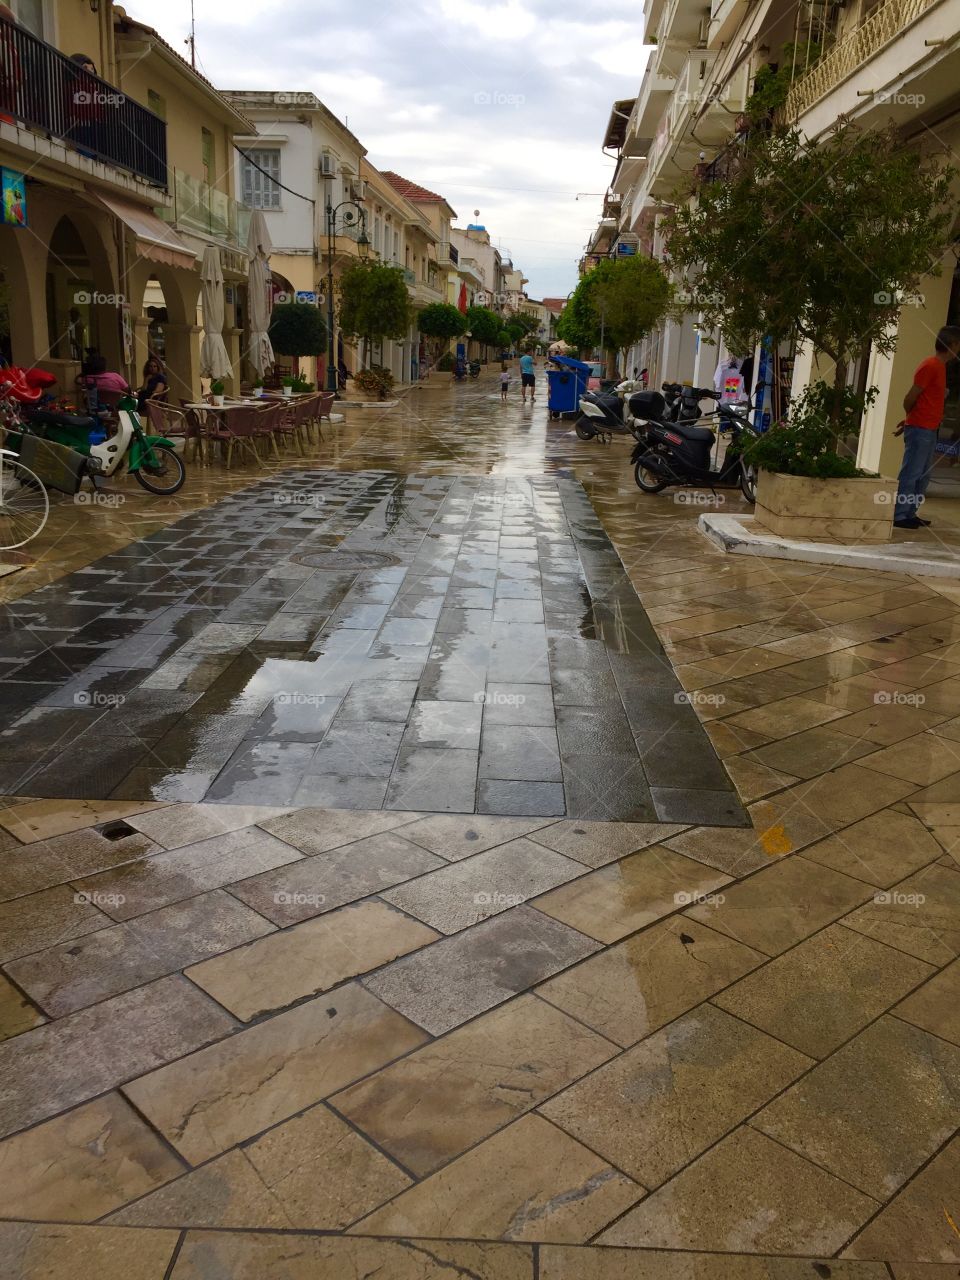 Raining Greece